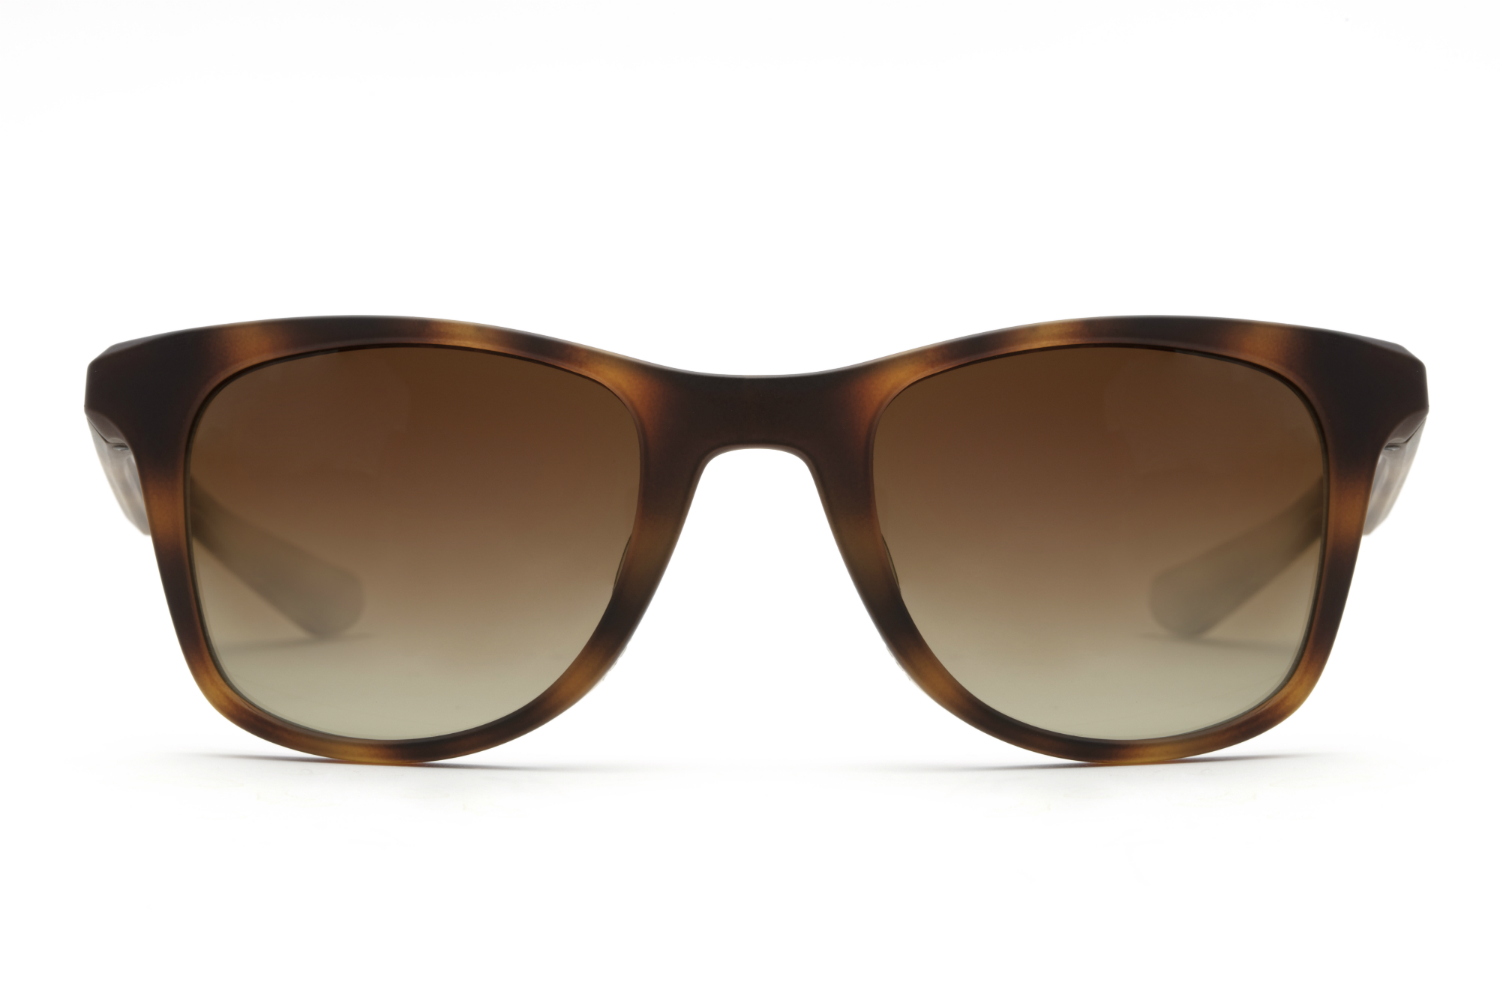 krewe active eyewear sunglasses emmett mattebaytort front